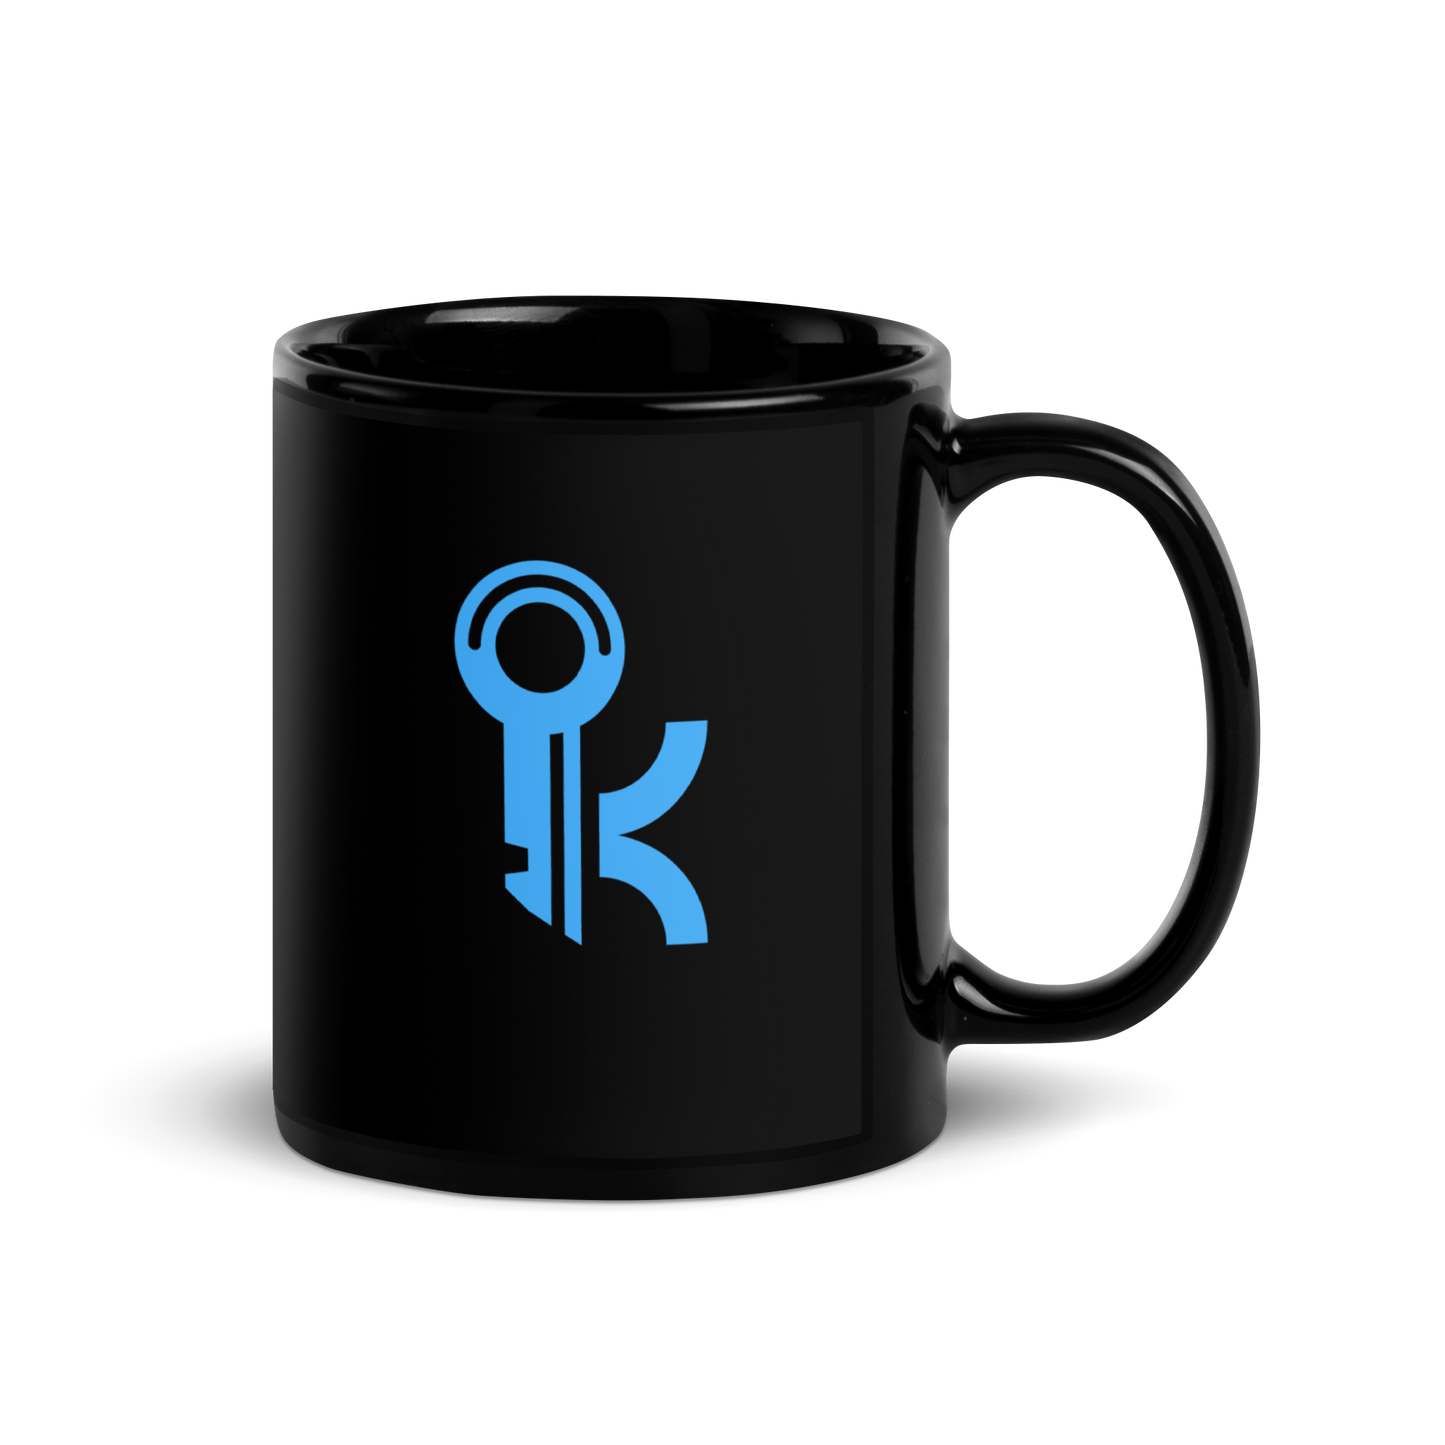 Collecting Keys Podcast - Black Mug